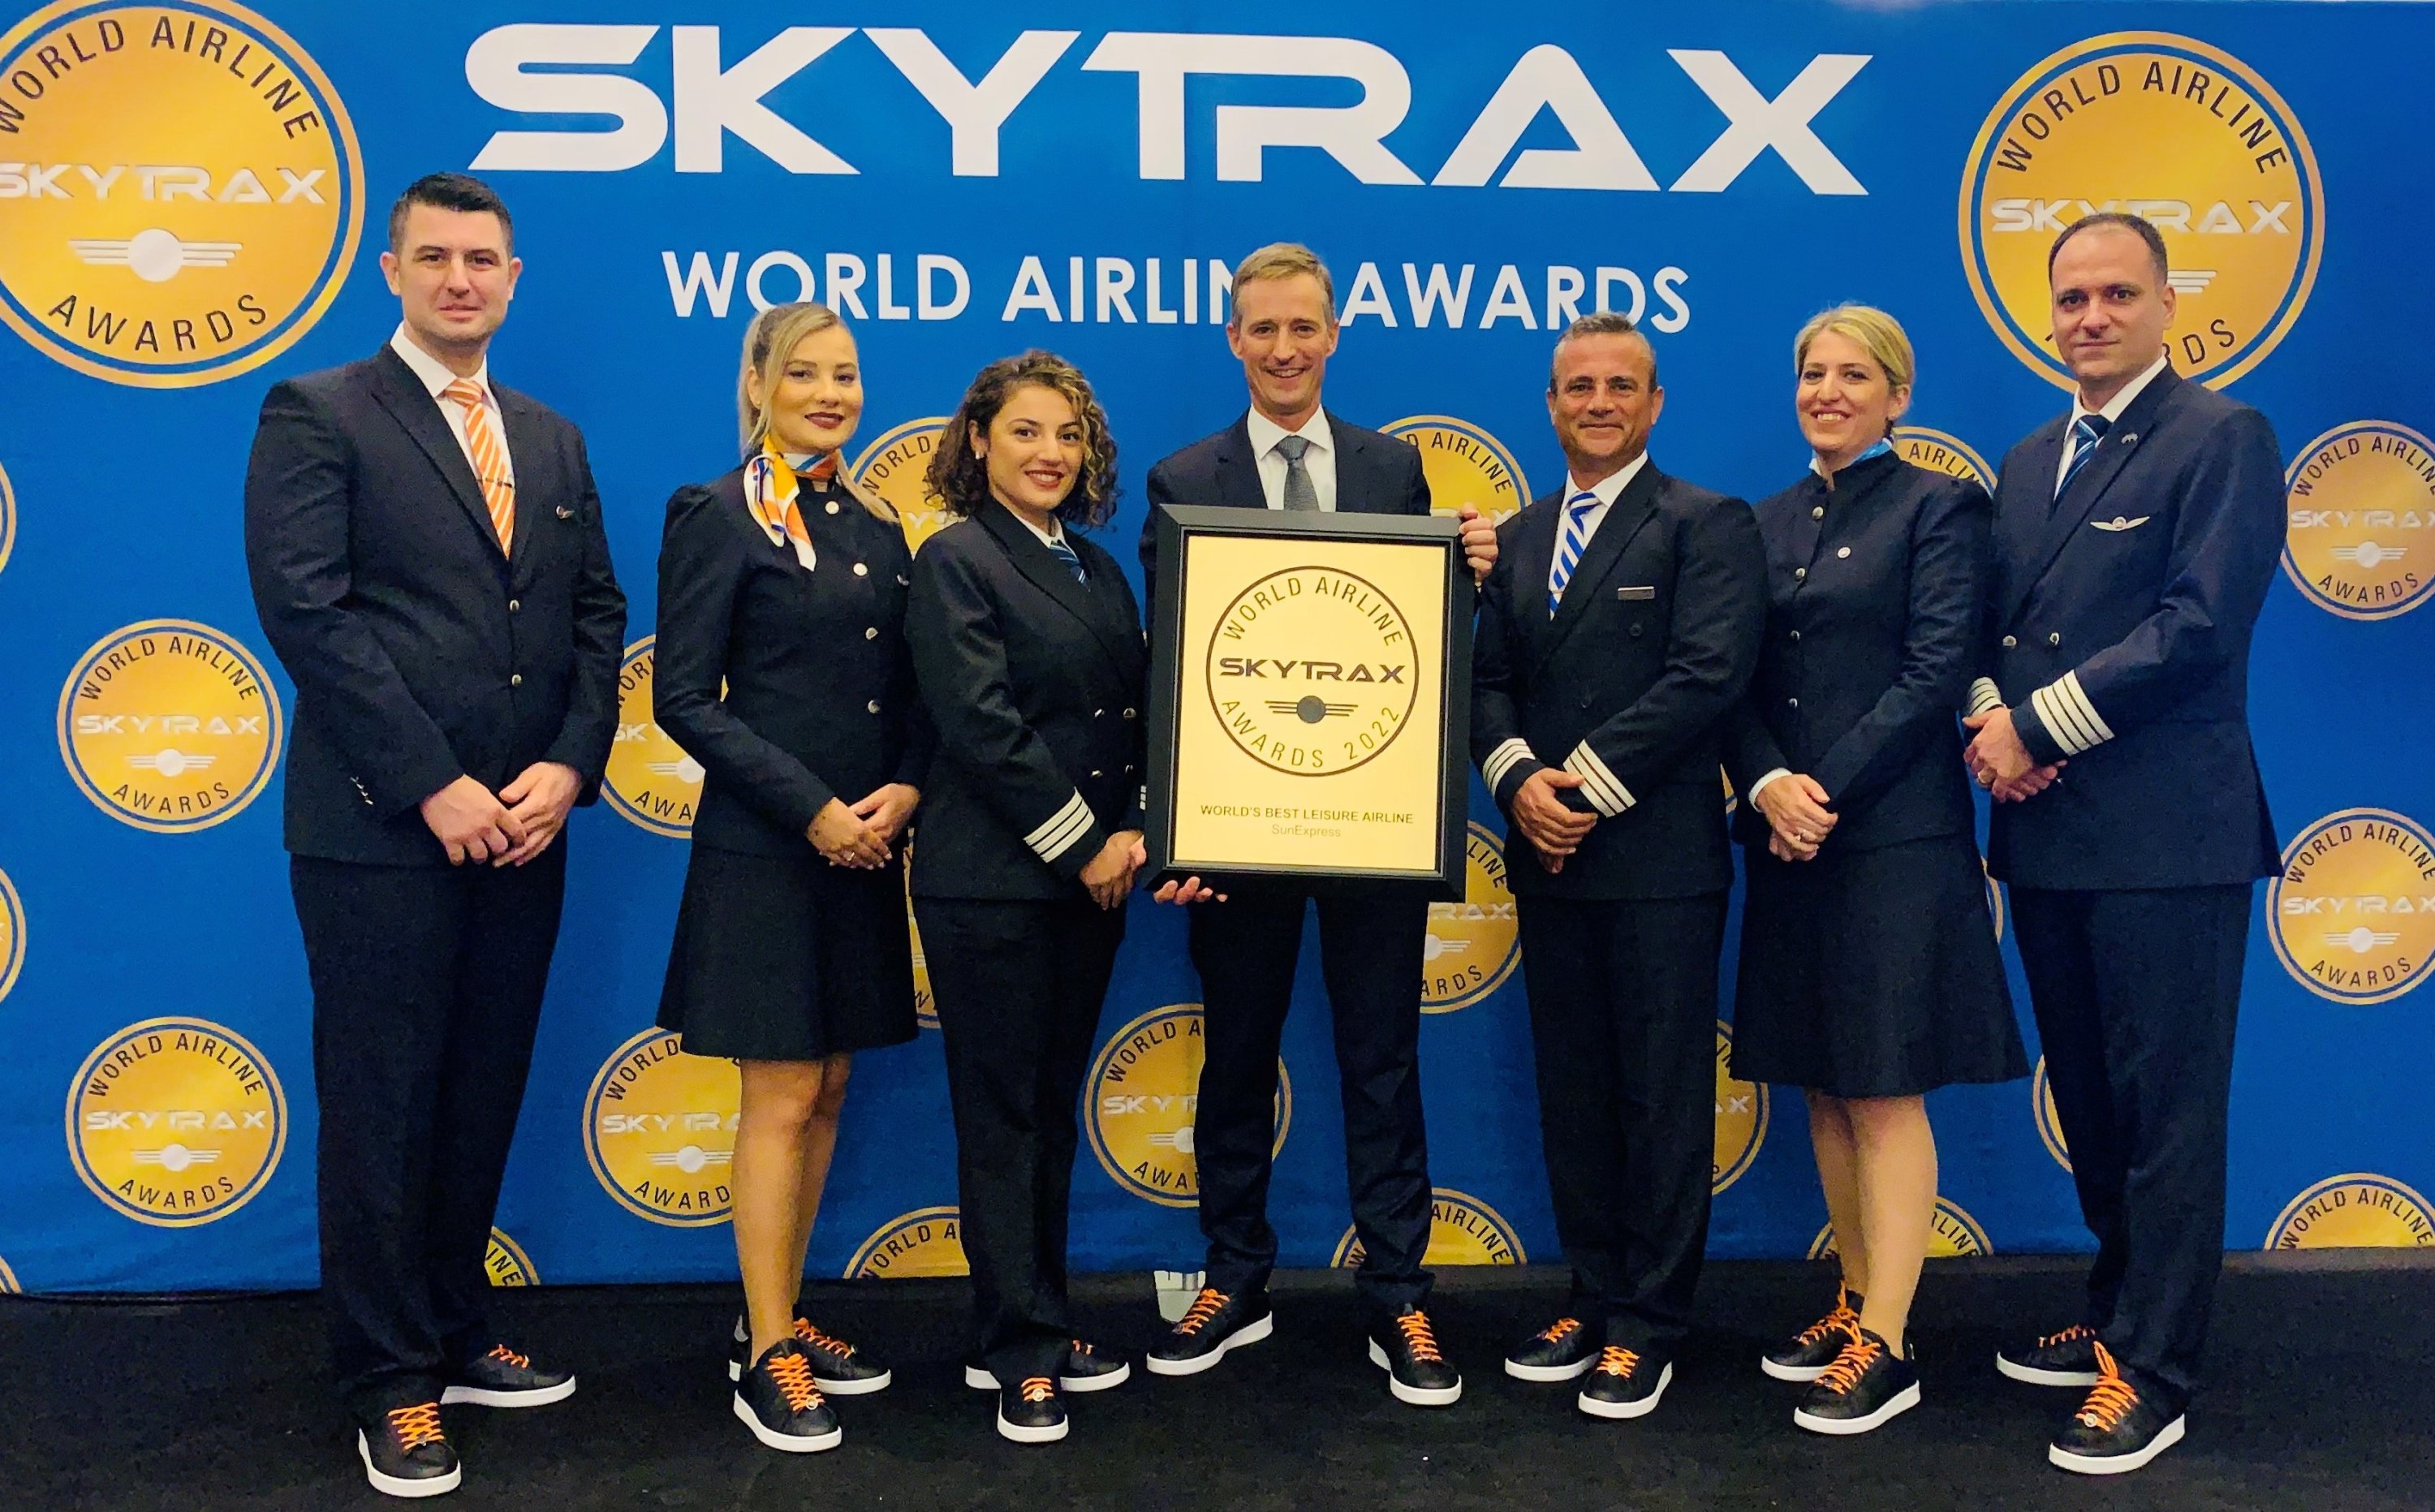 Max Kownatzki, CEO SunExpress, menerima penghargaan selama Skytrax World Airline Awards 2022, London, Inggris, 23 September 2022. (DHA Photo)